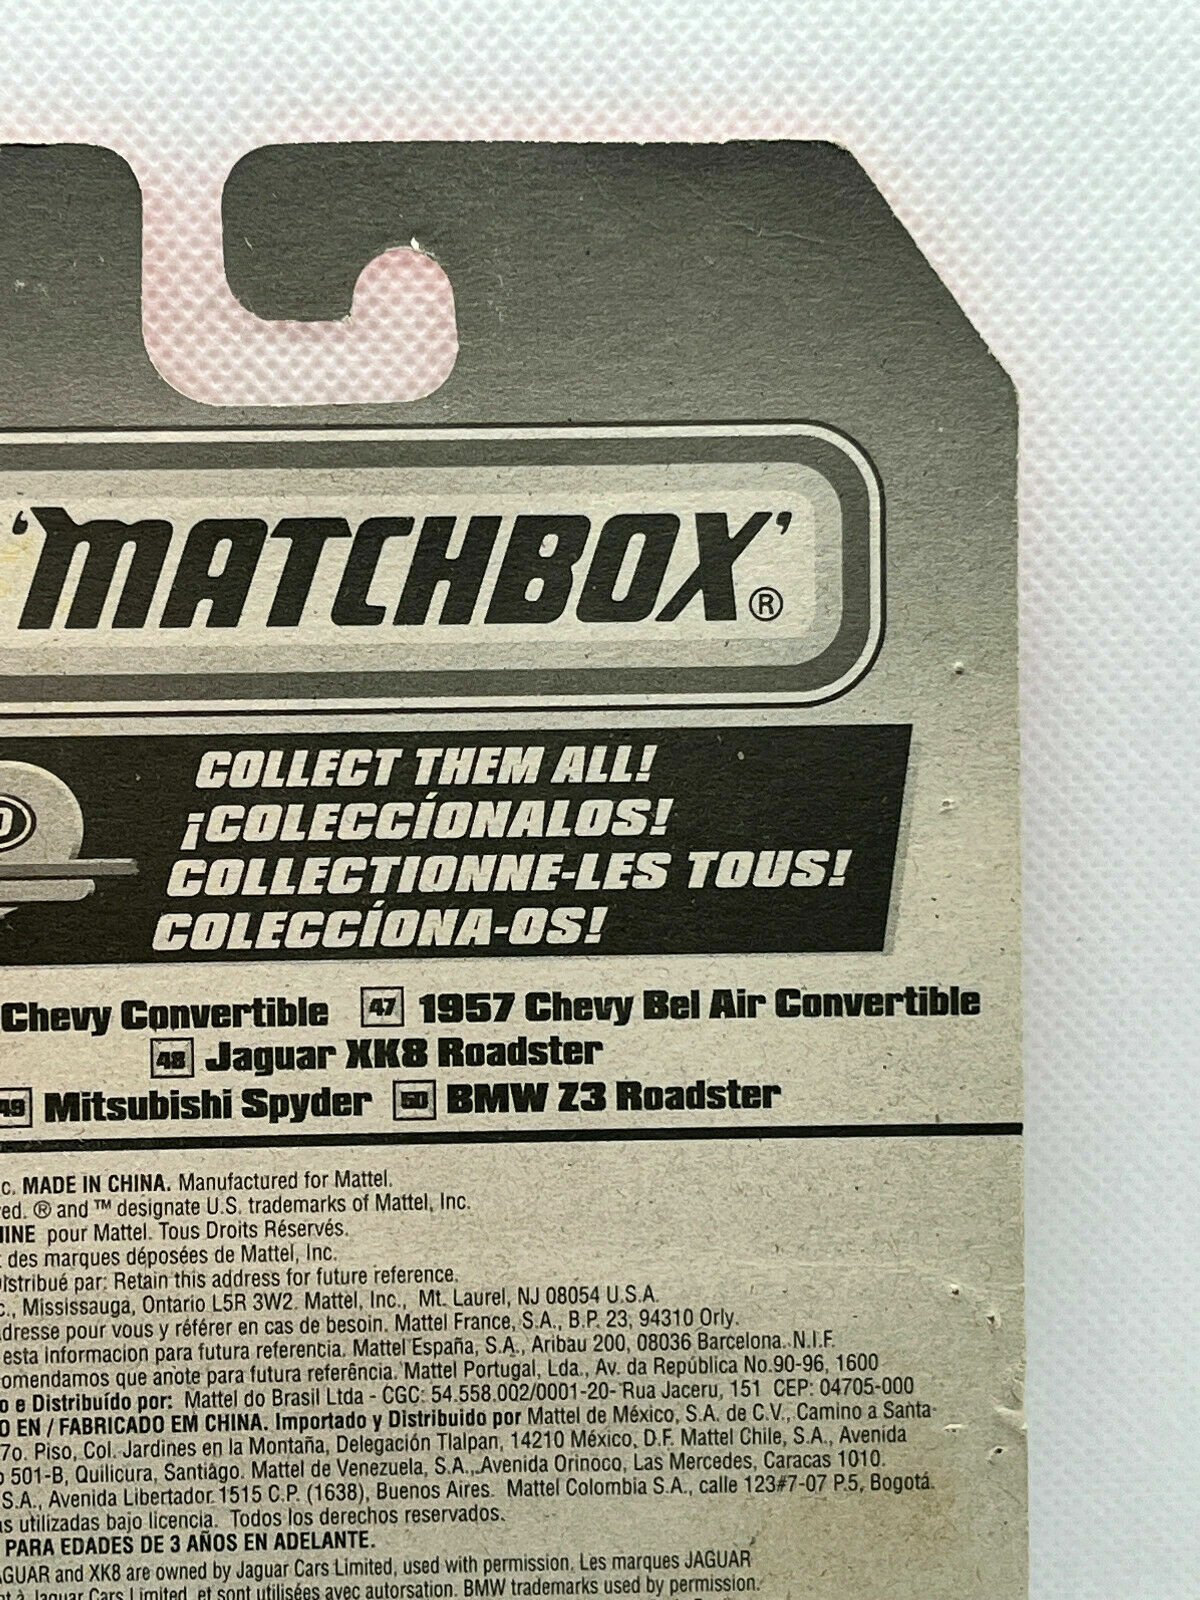 1998 Matchbox #47 1957 Chevy Bel Air Convertible NIP